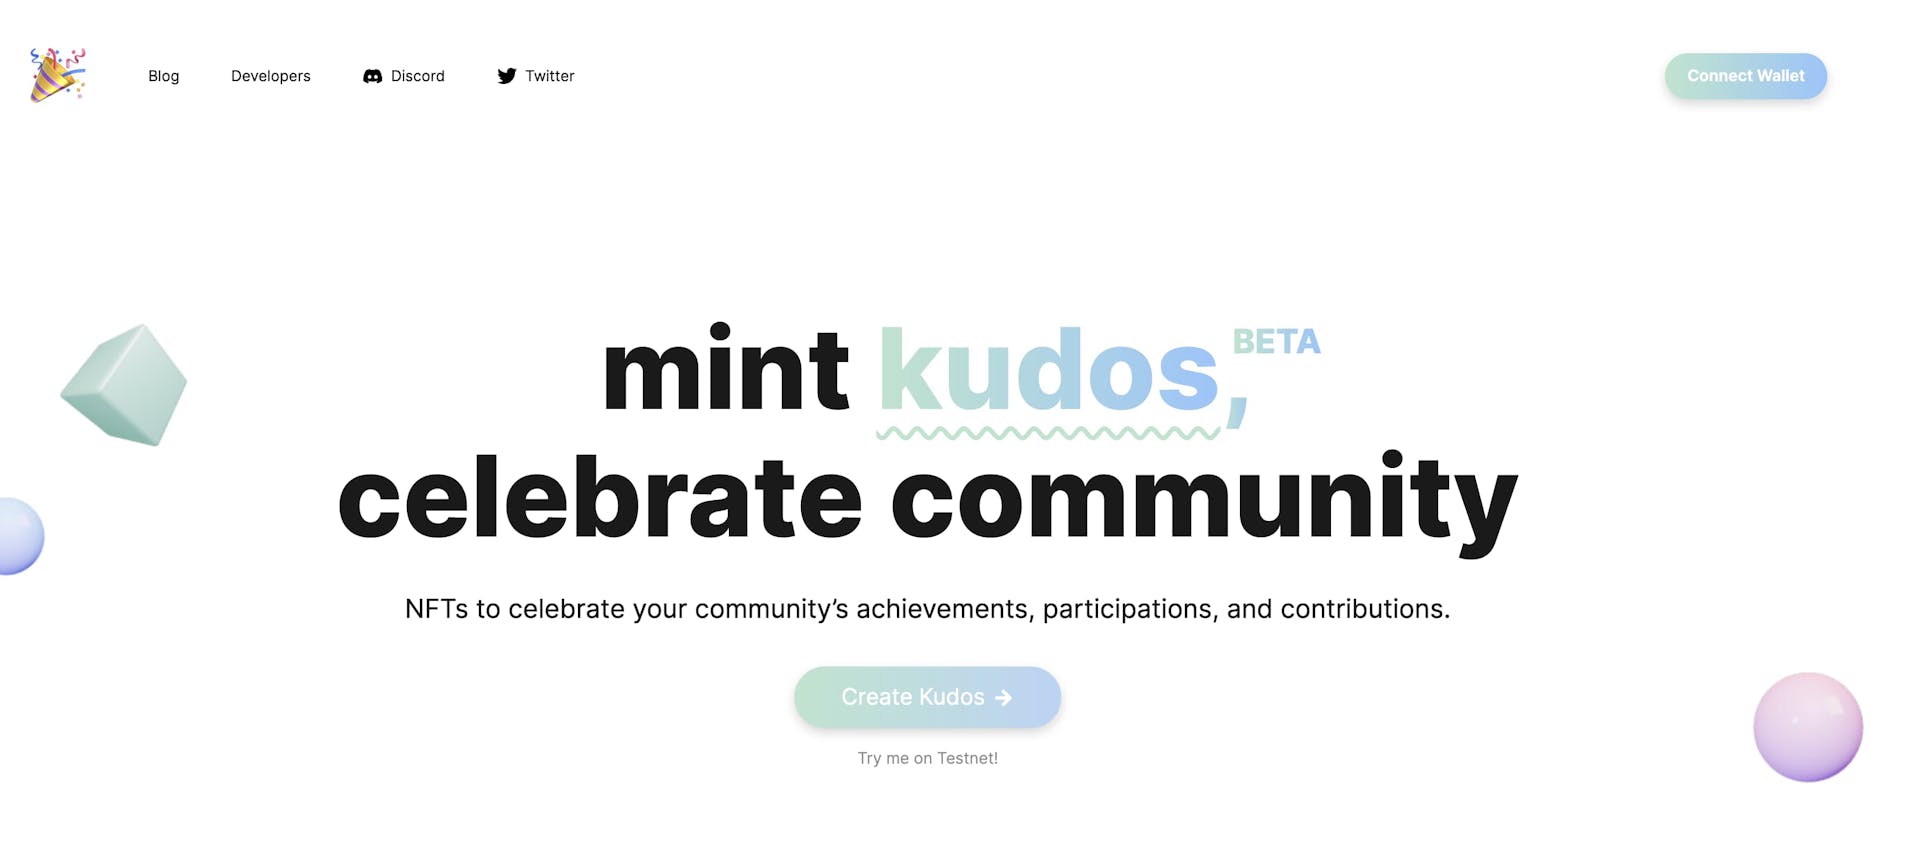 Mint Kudos DAO Achievement Tool - Website Homepage